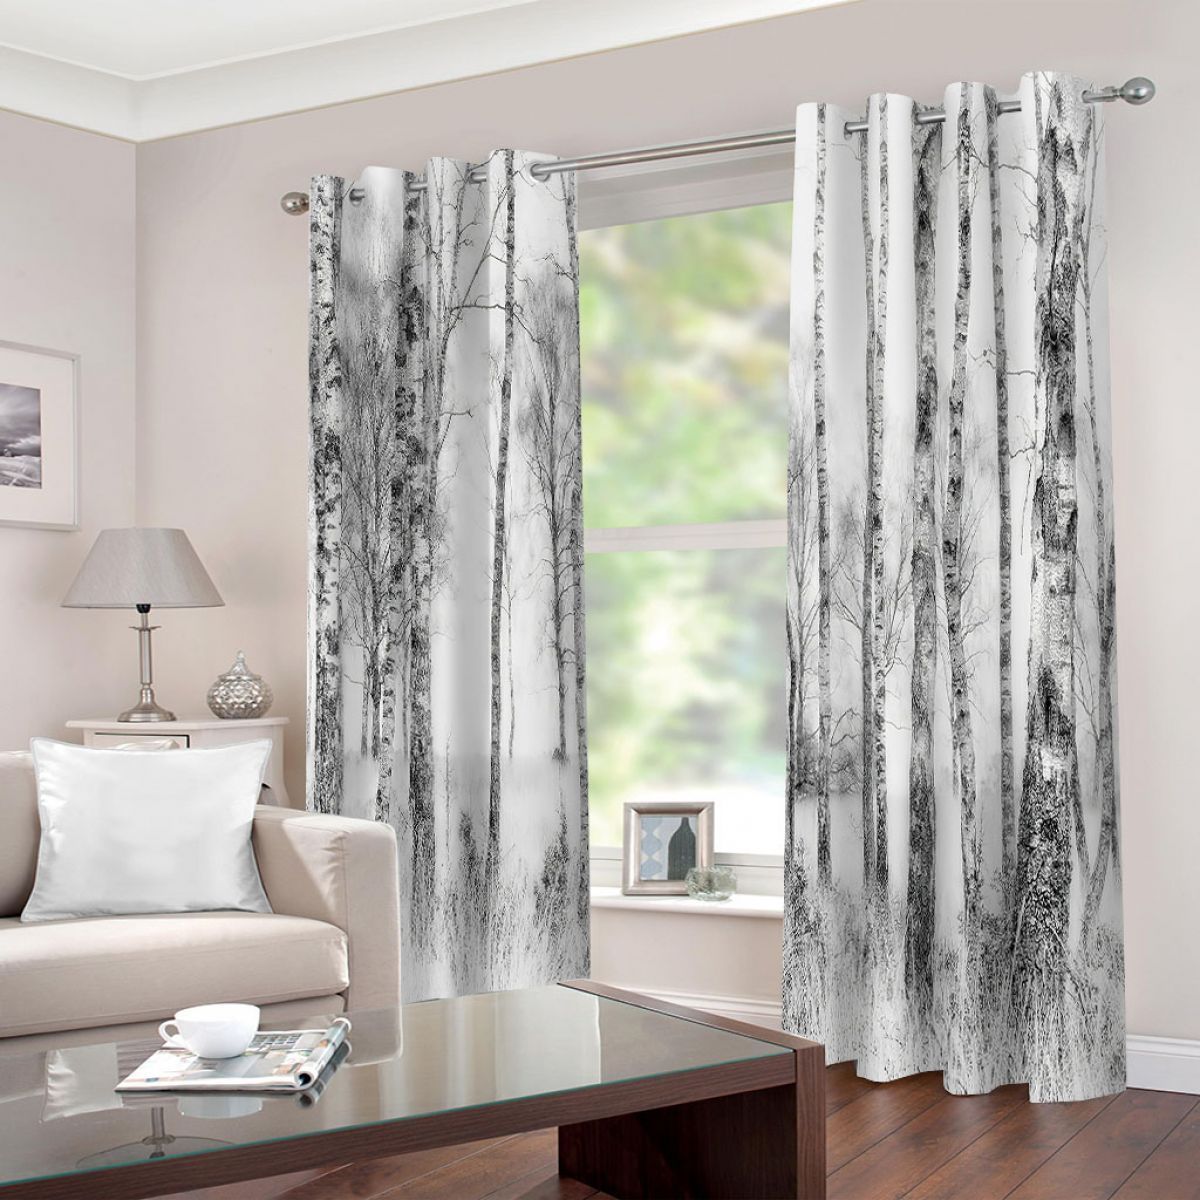 gray trees printed window curtain home decor 5721